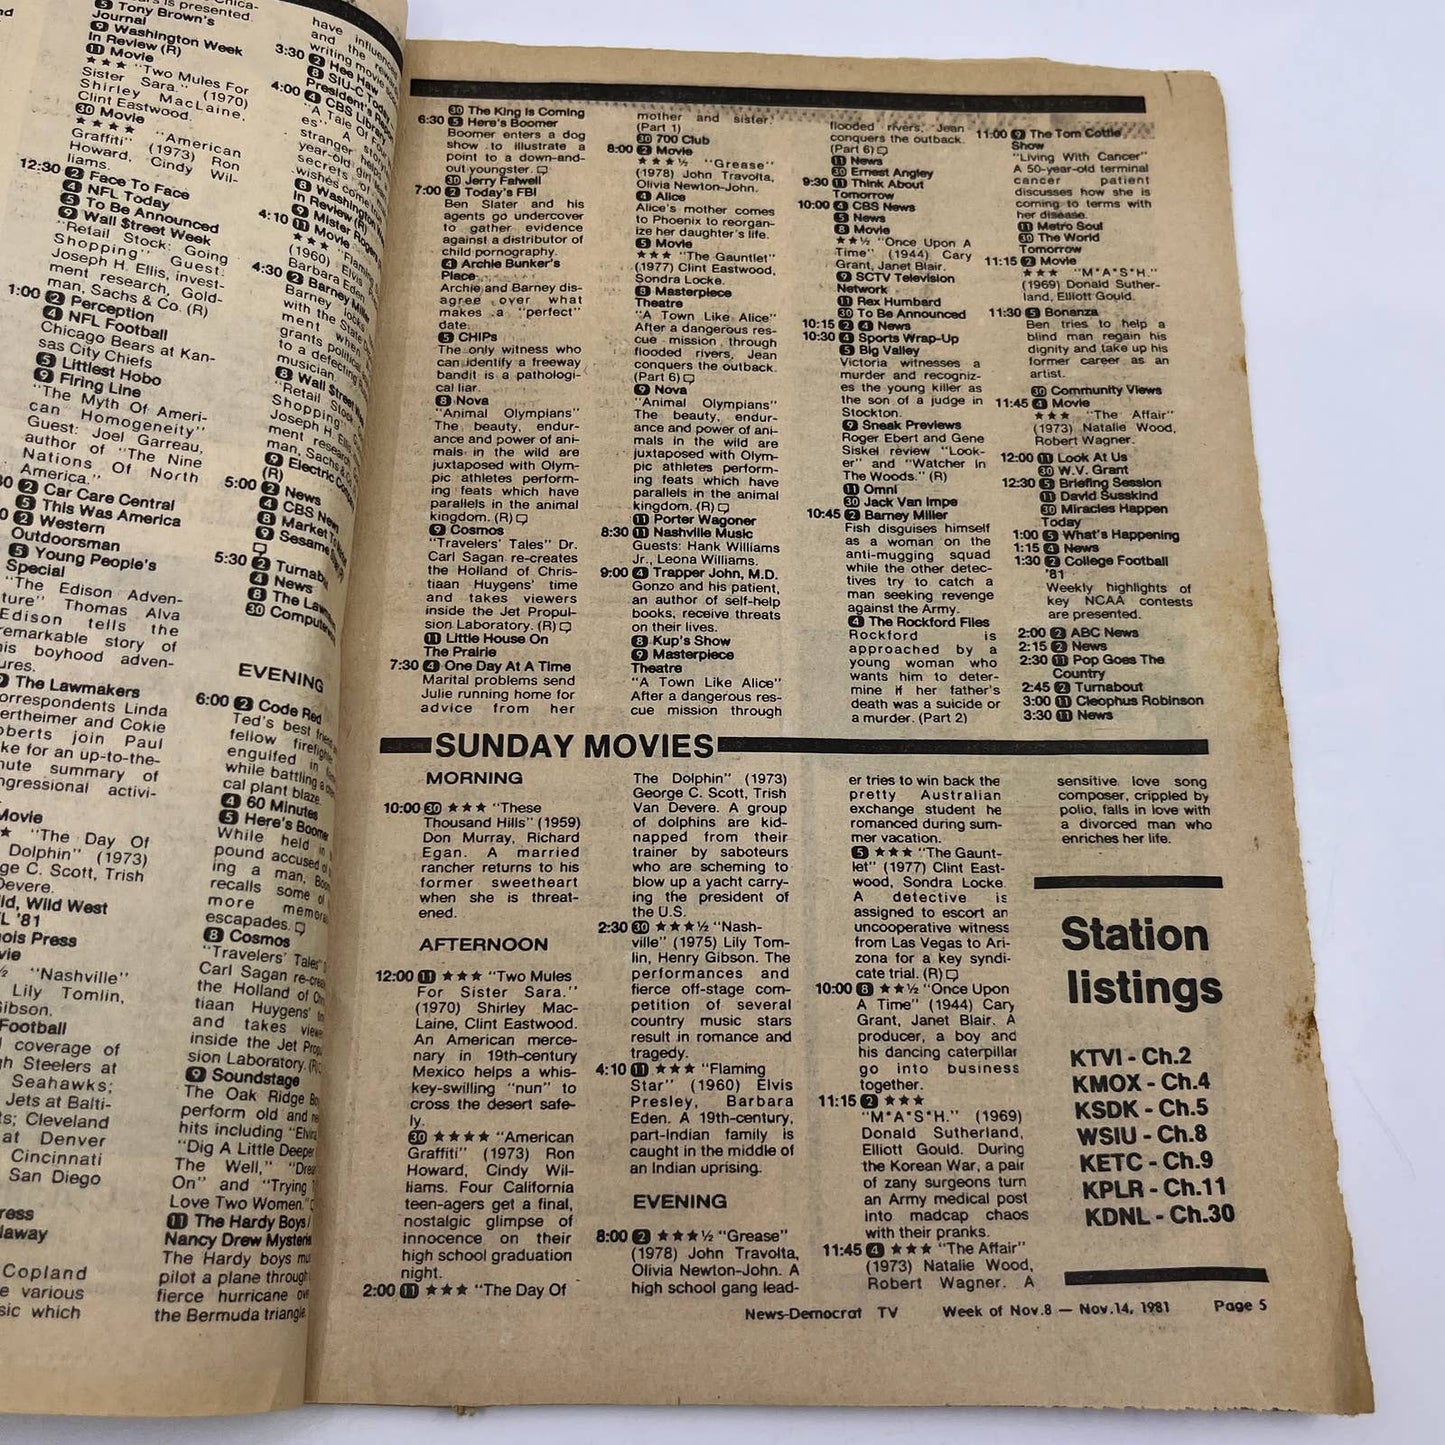 1981 Nov 8 Bellville IL News-Democrat TV Listing Magazine WKRP in Cincinnati TG6